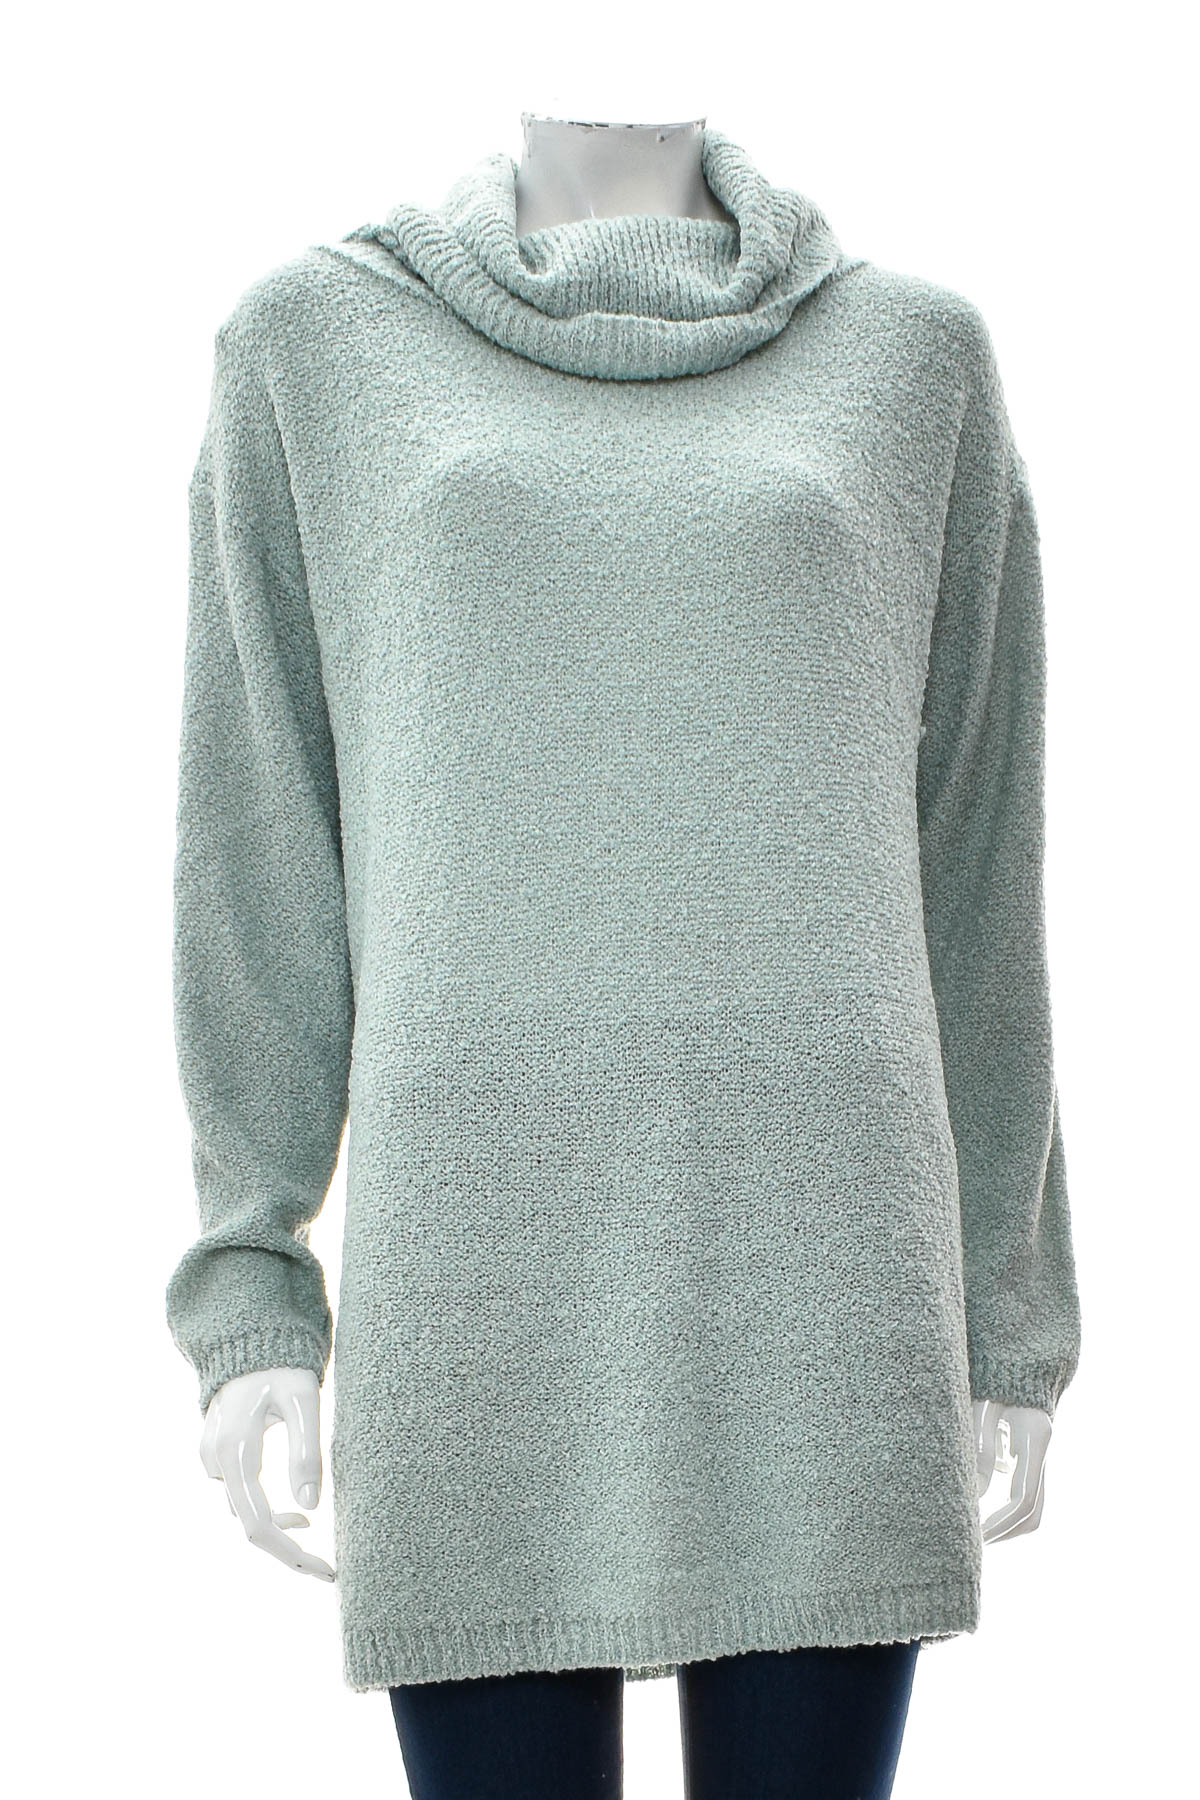 Women's sweater - 0